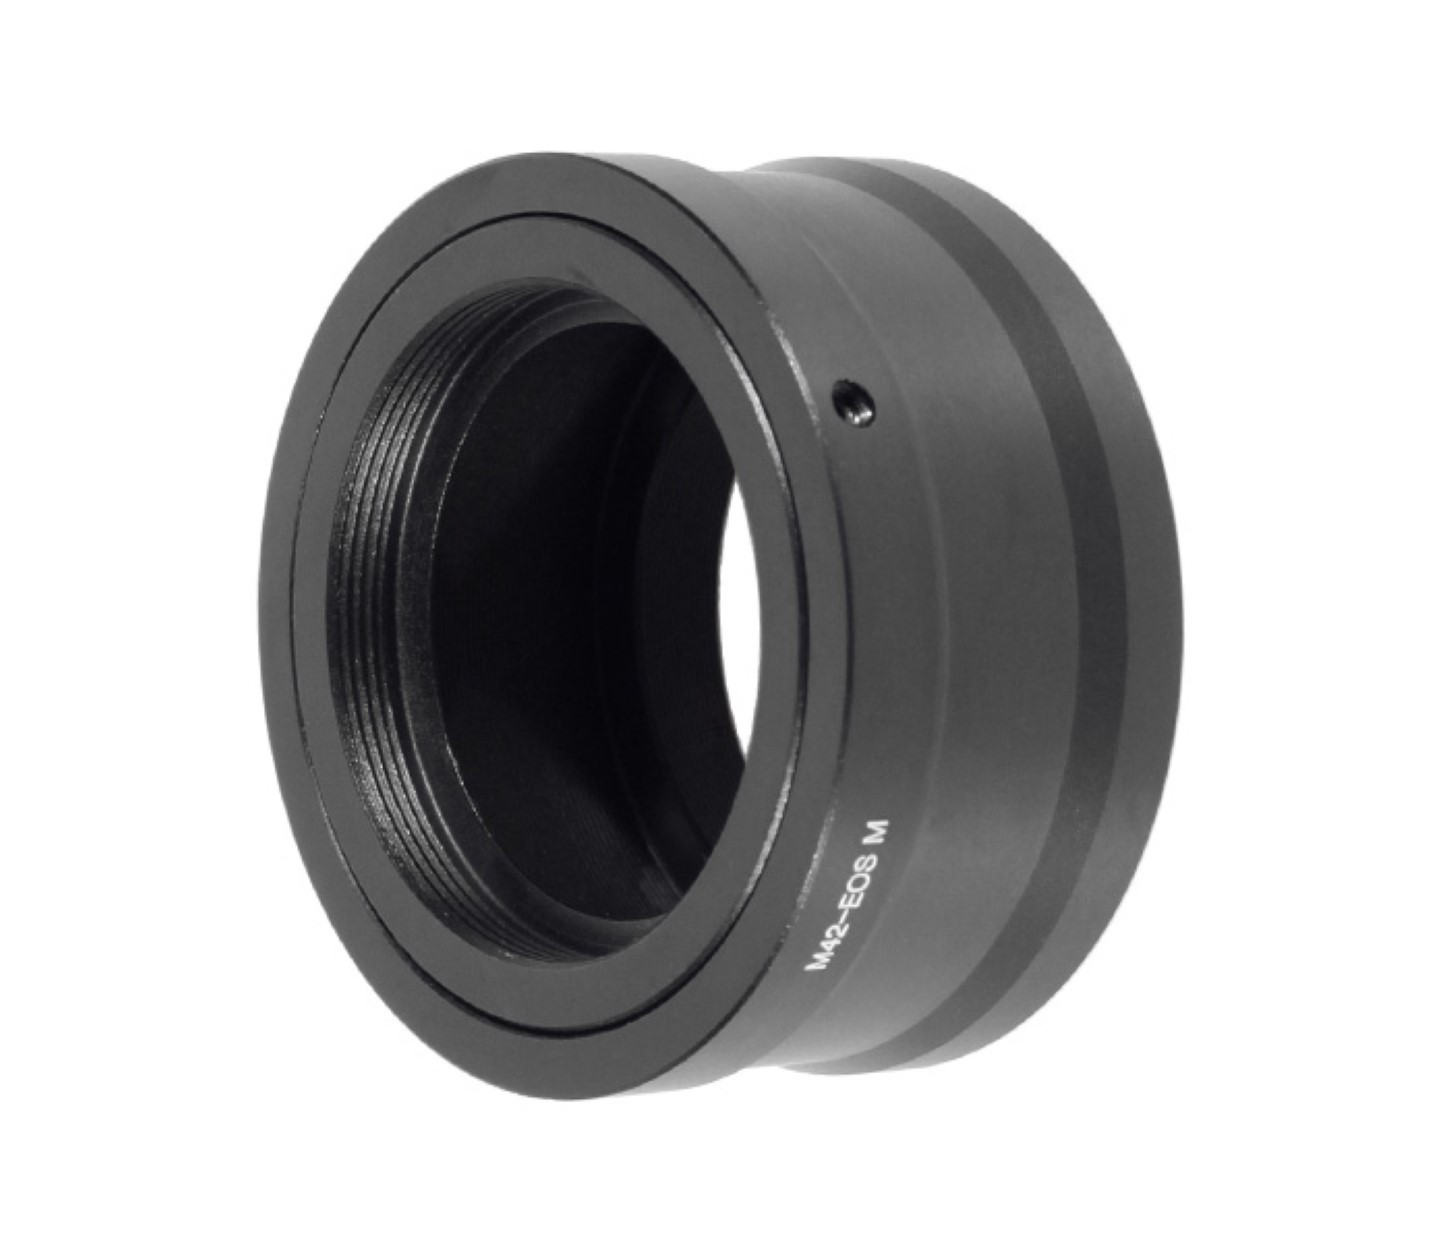 Objektiv-Adapter für M42 Objektive an Canon EOS M Kamera